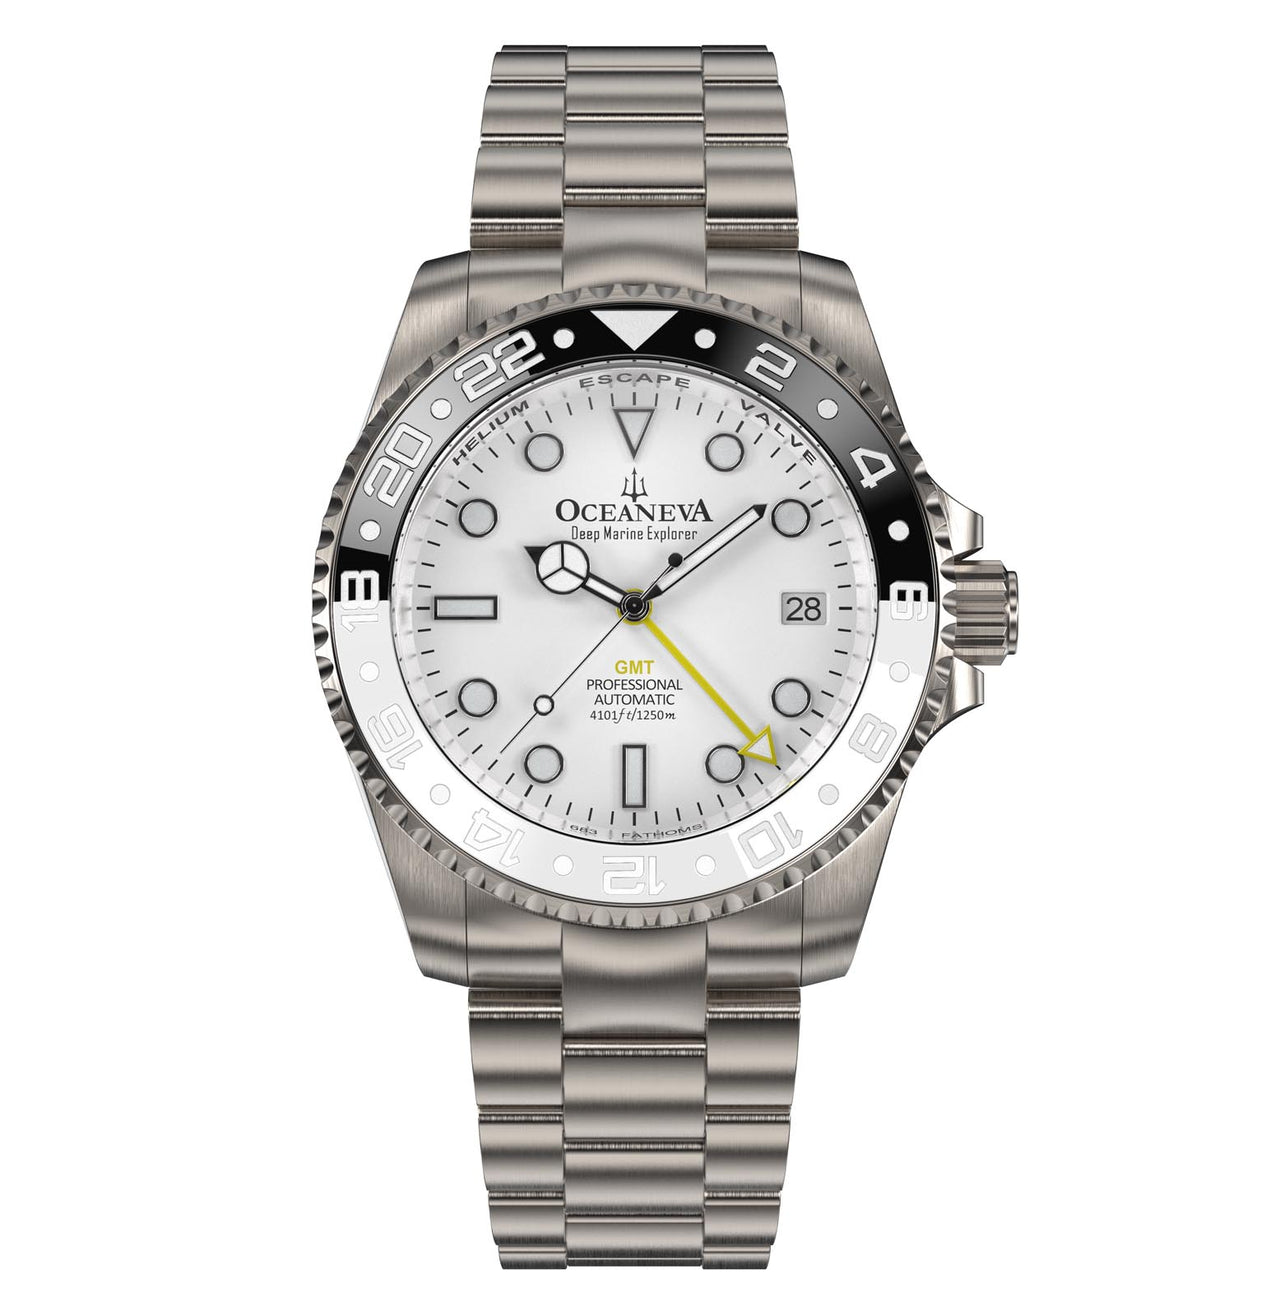 Close-up of Oceaneva Titanium Watch with white and black ceramic bezel